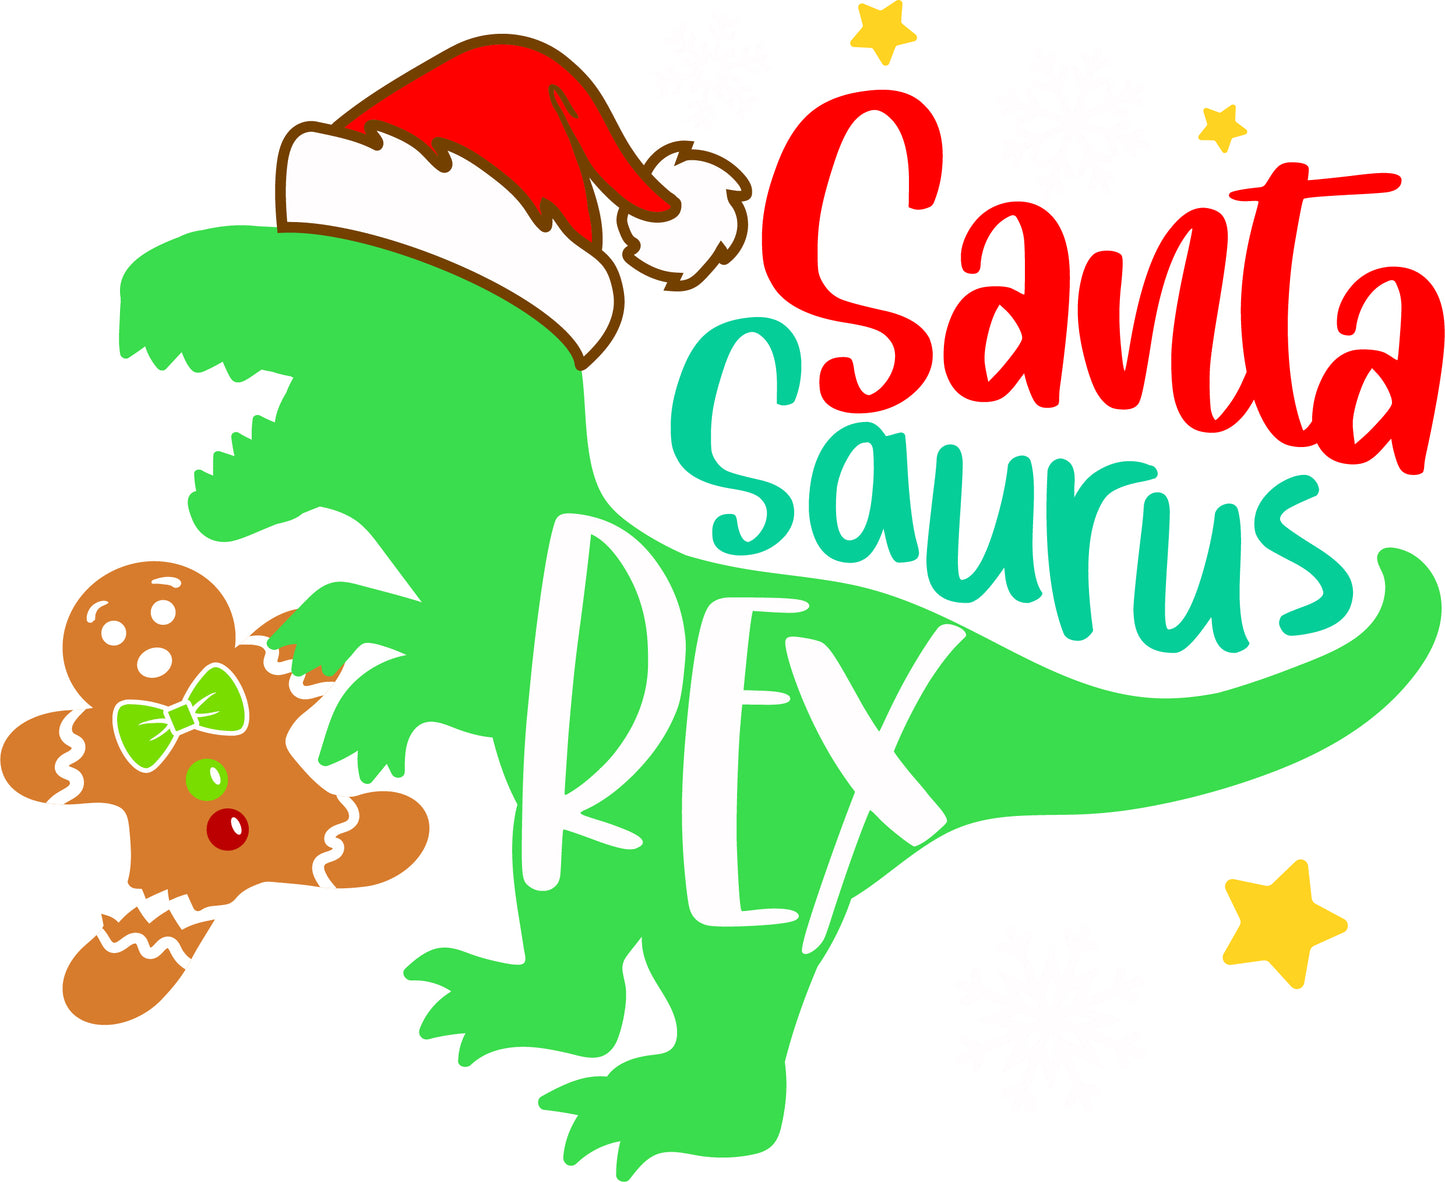 Santa Saurus Rex